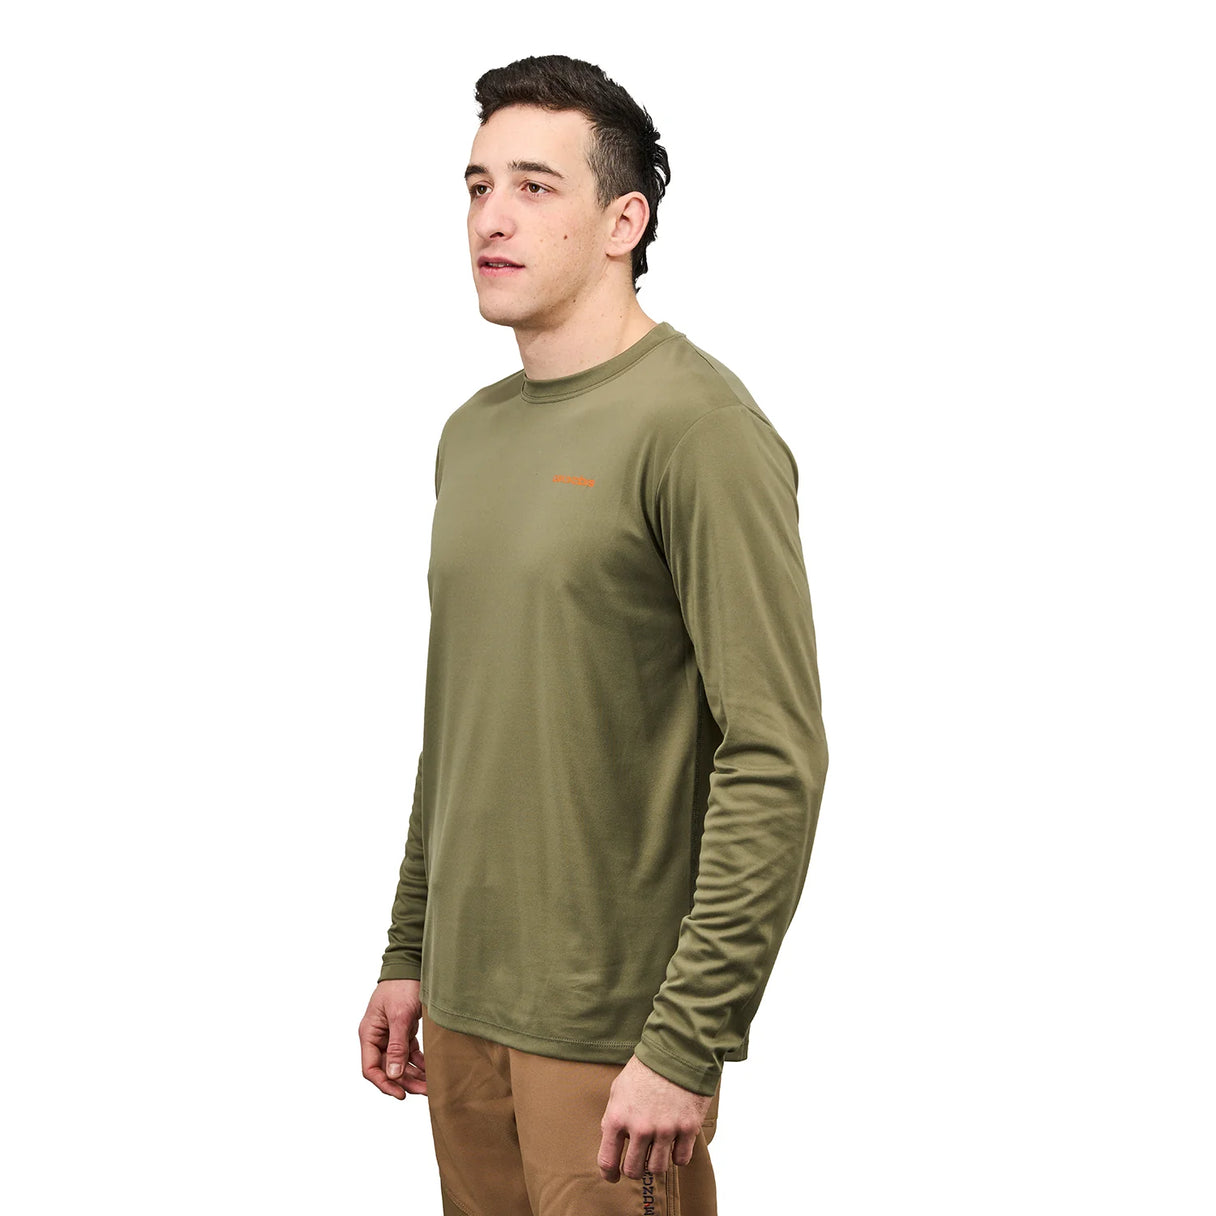 Hardy Bros Fishing EWS long sleeved shirt - Size Medium